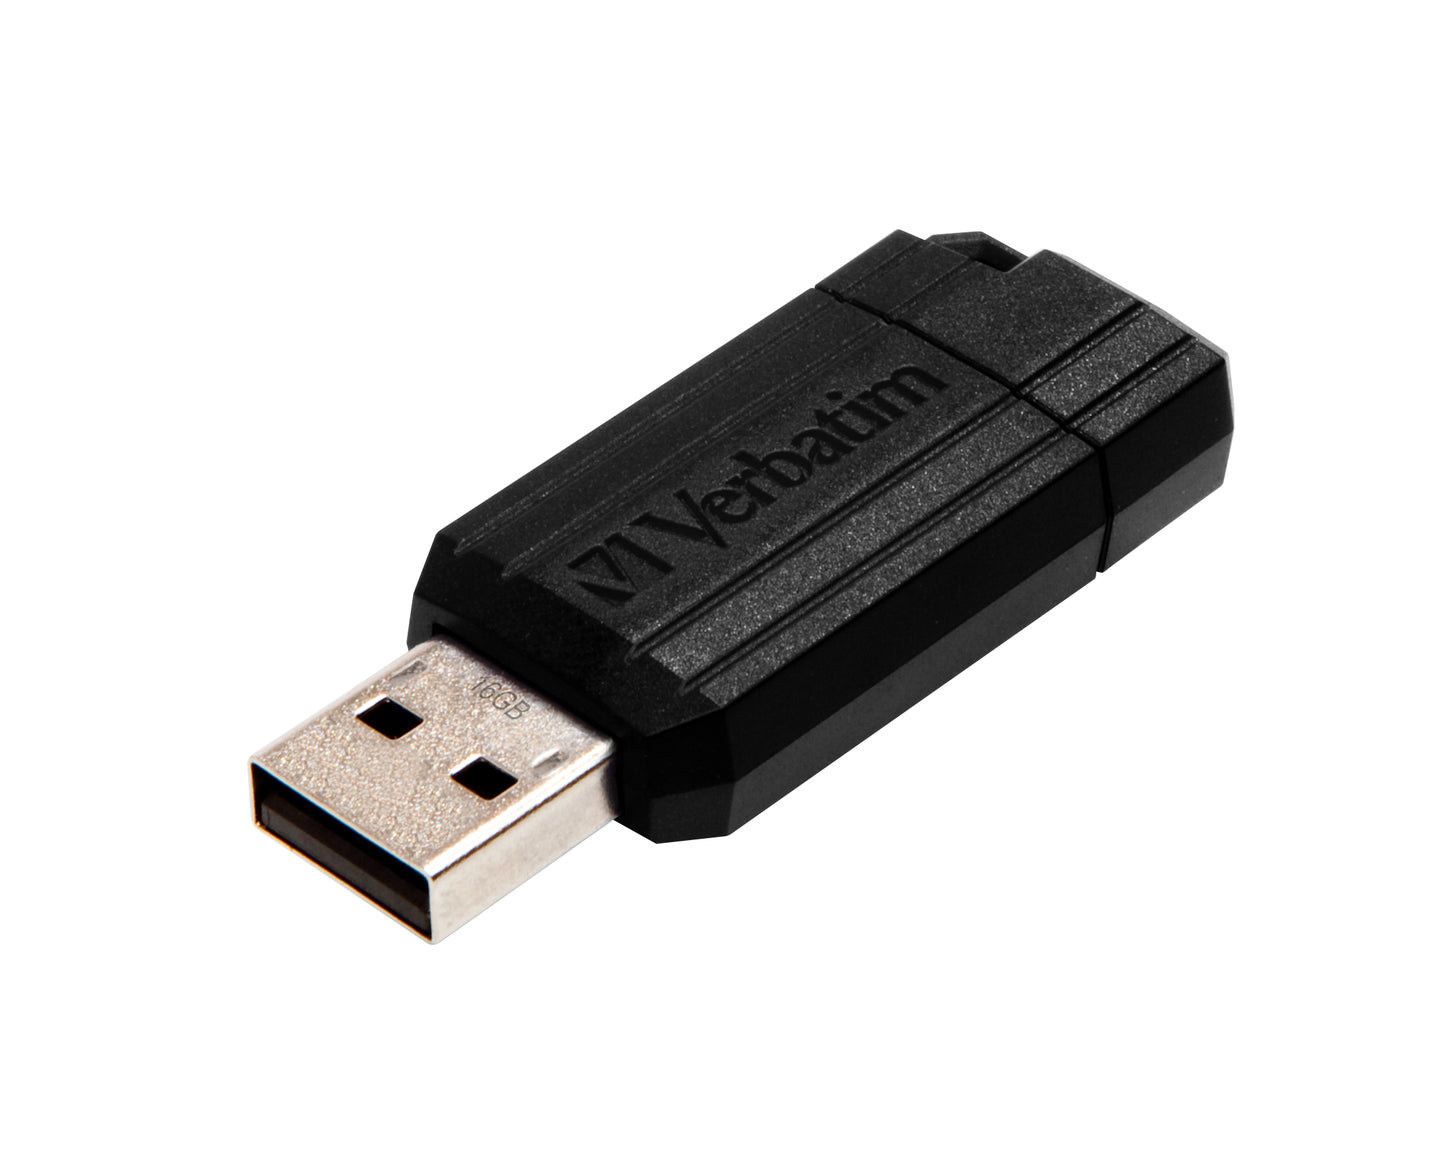 USB 16GB  BLACK PINSTRIPE VERBATIM